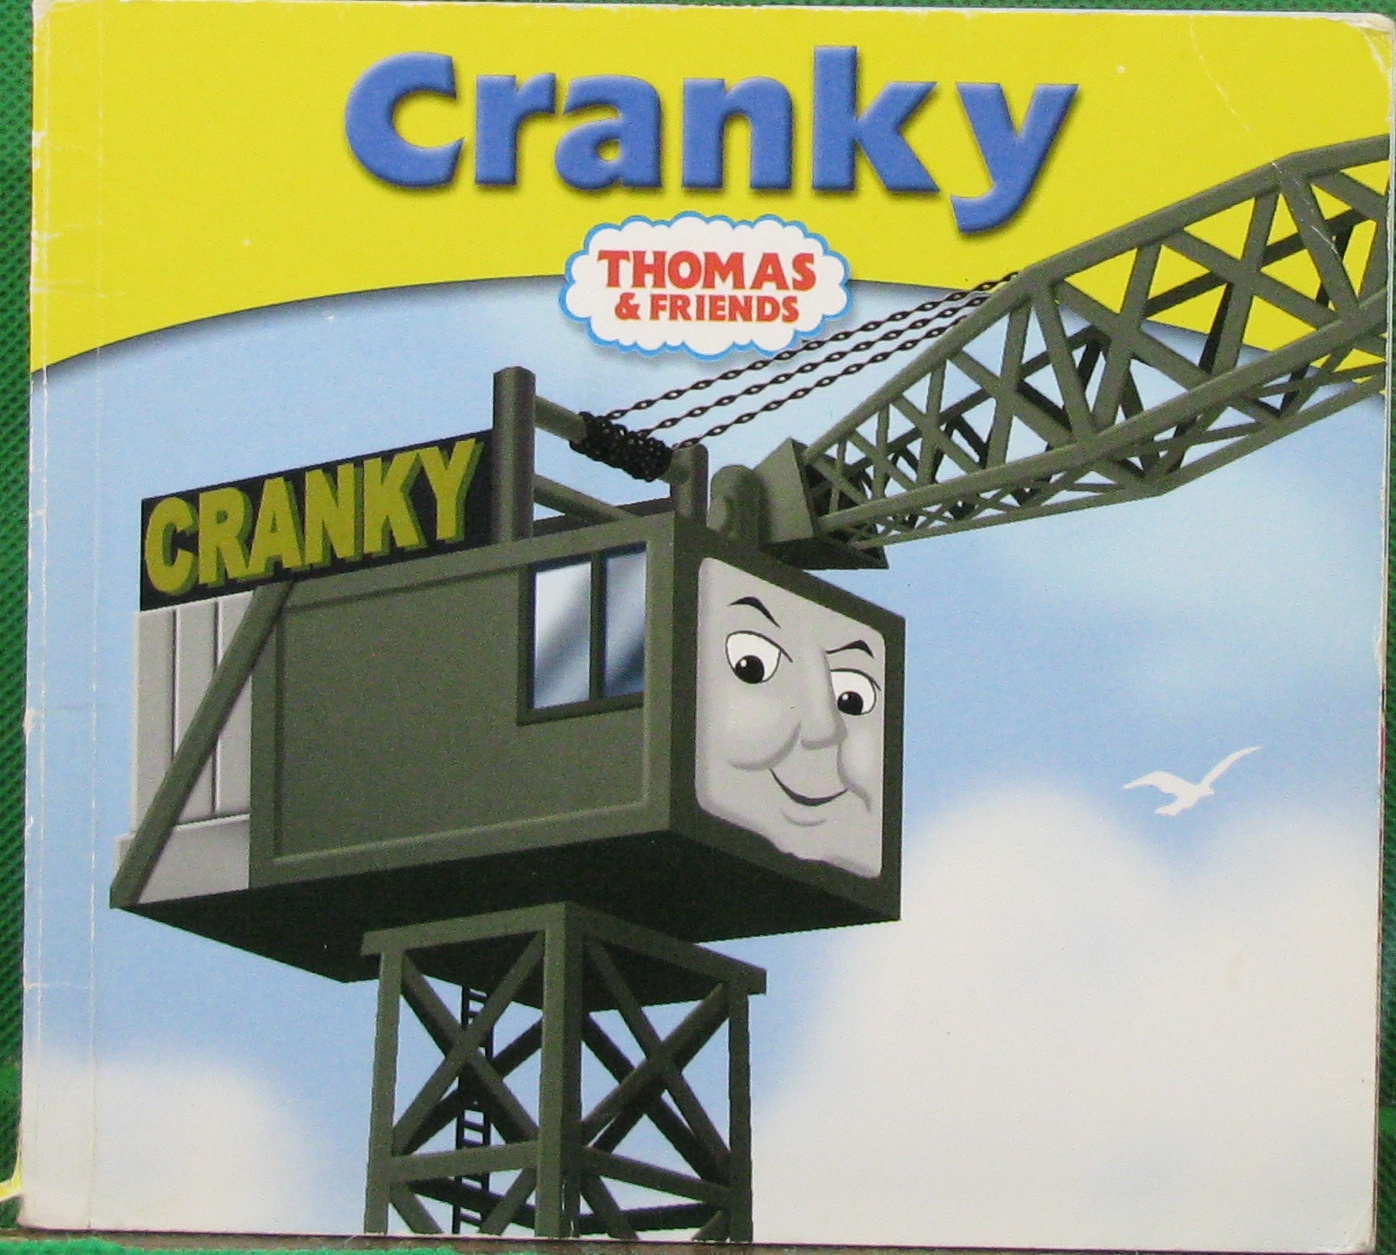 cranky(thomas & friends)